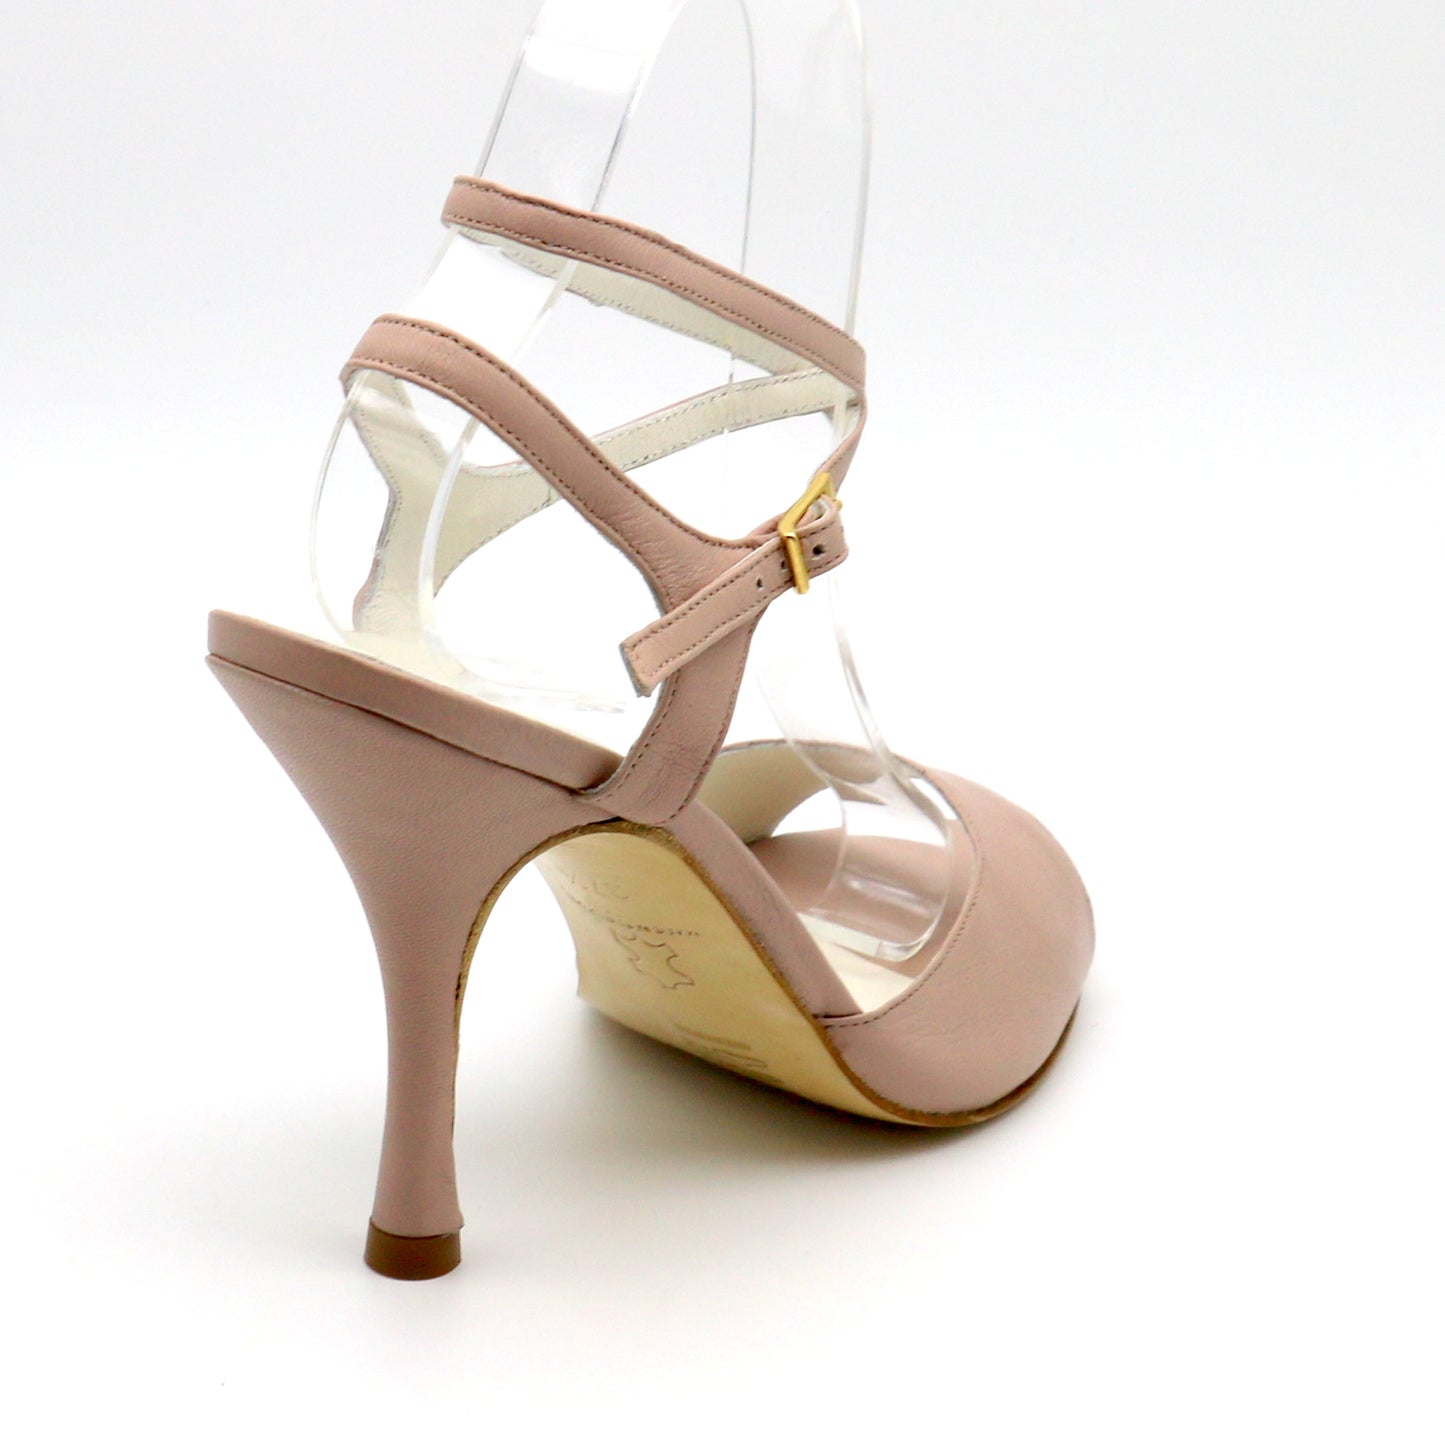 Sentimental smooth pink nude leather 9cm heels